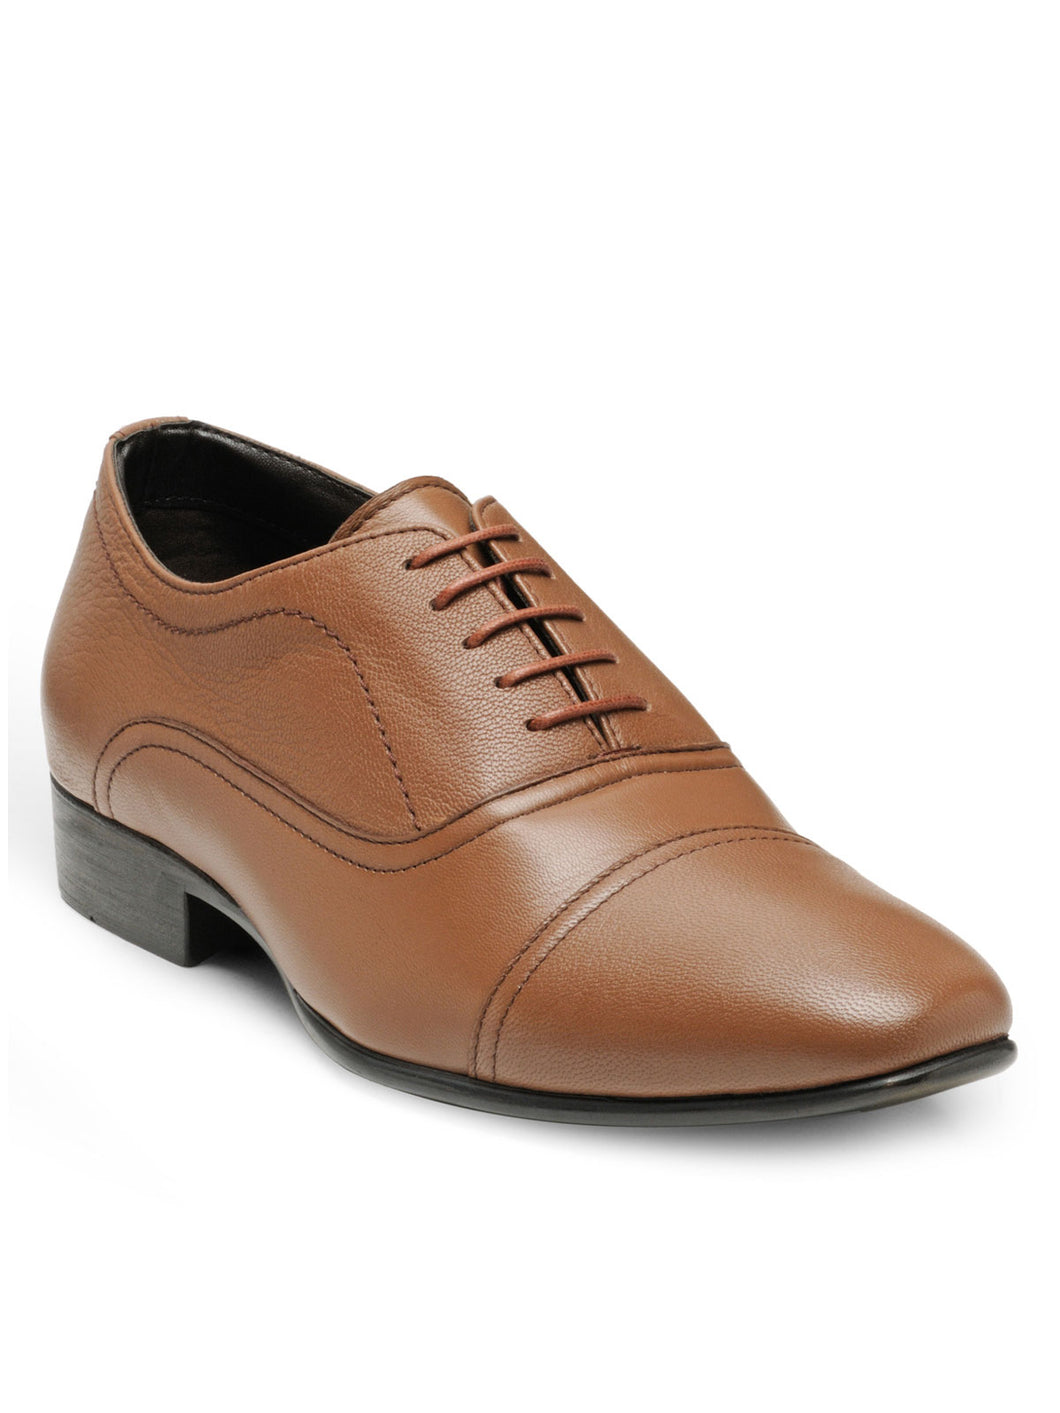 Teakwood Leather Men's Tan Derby Shoes